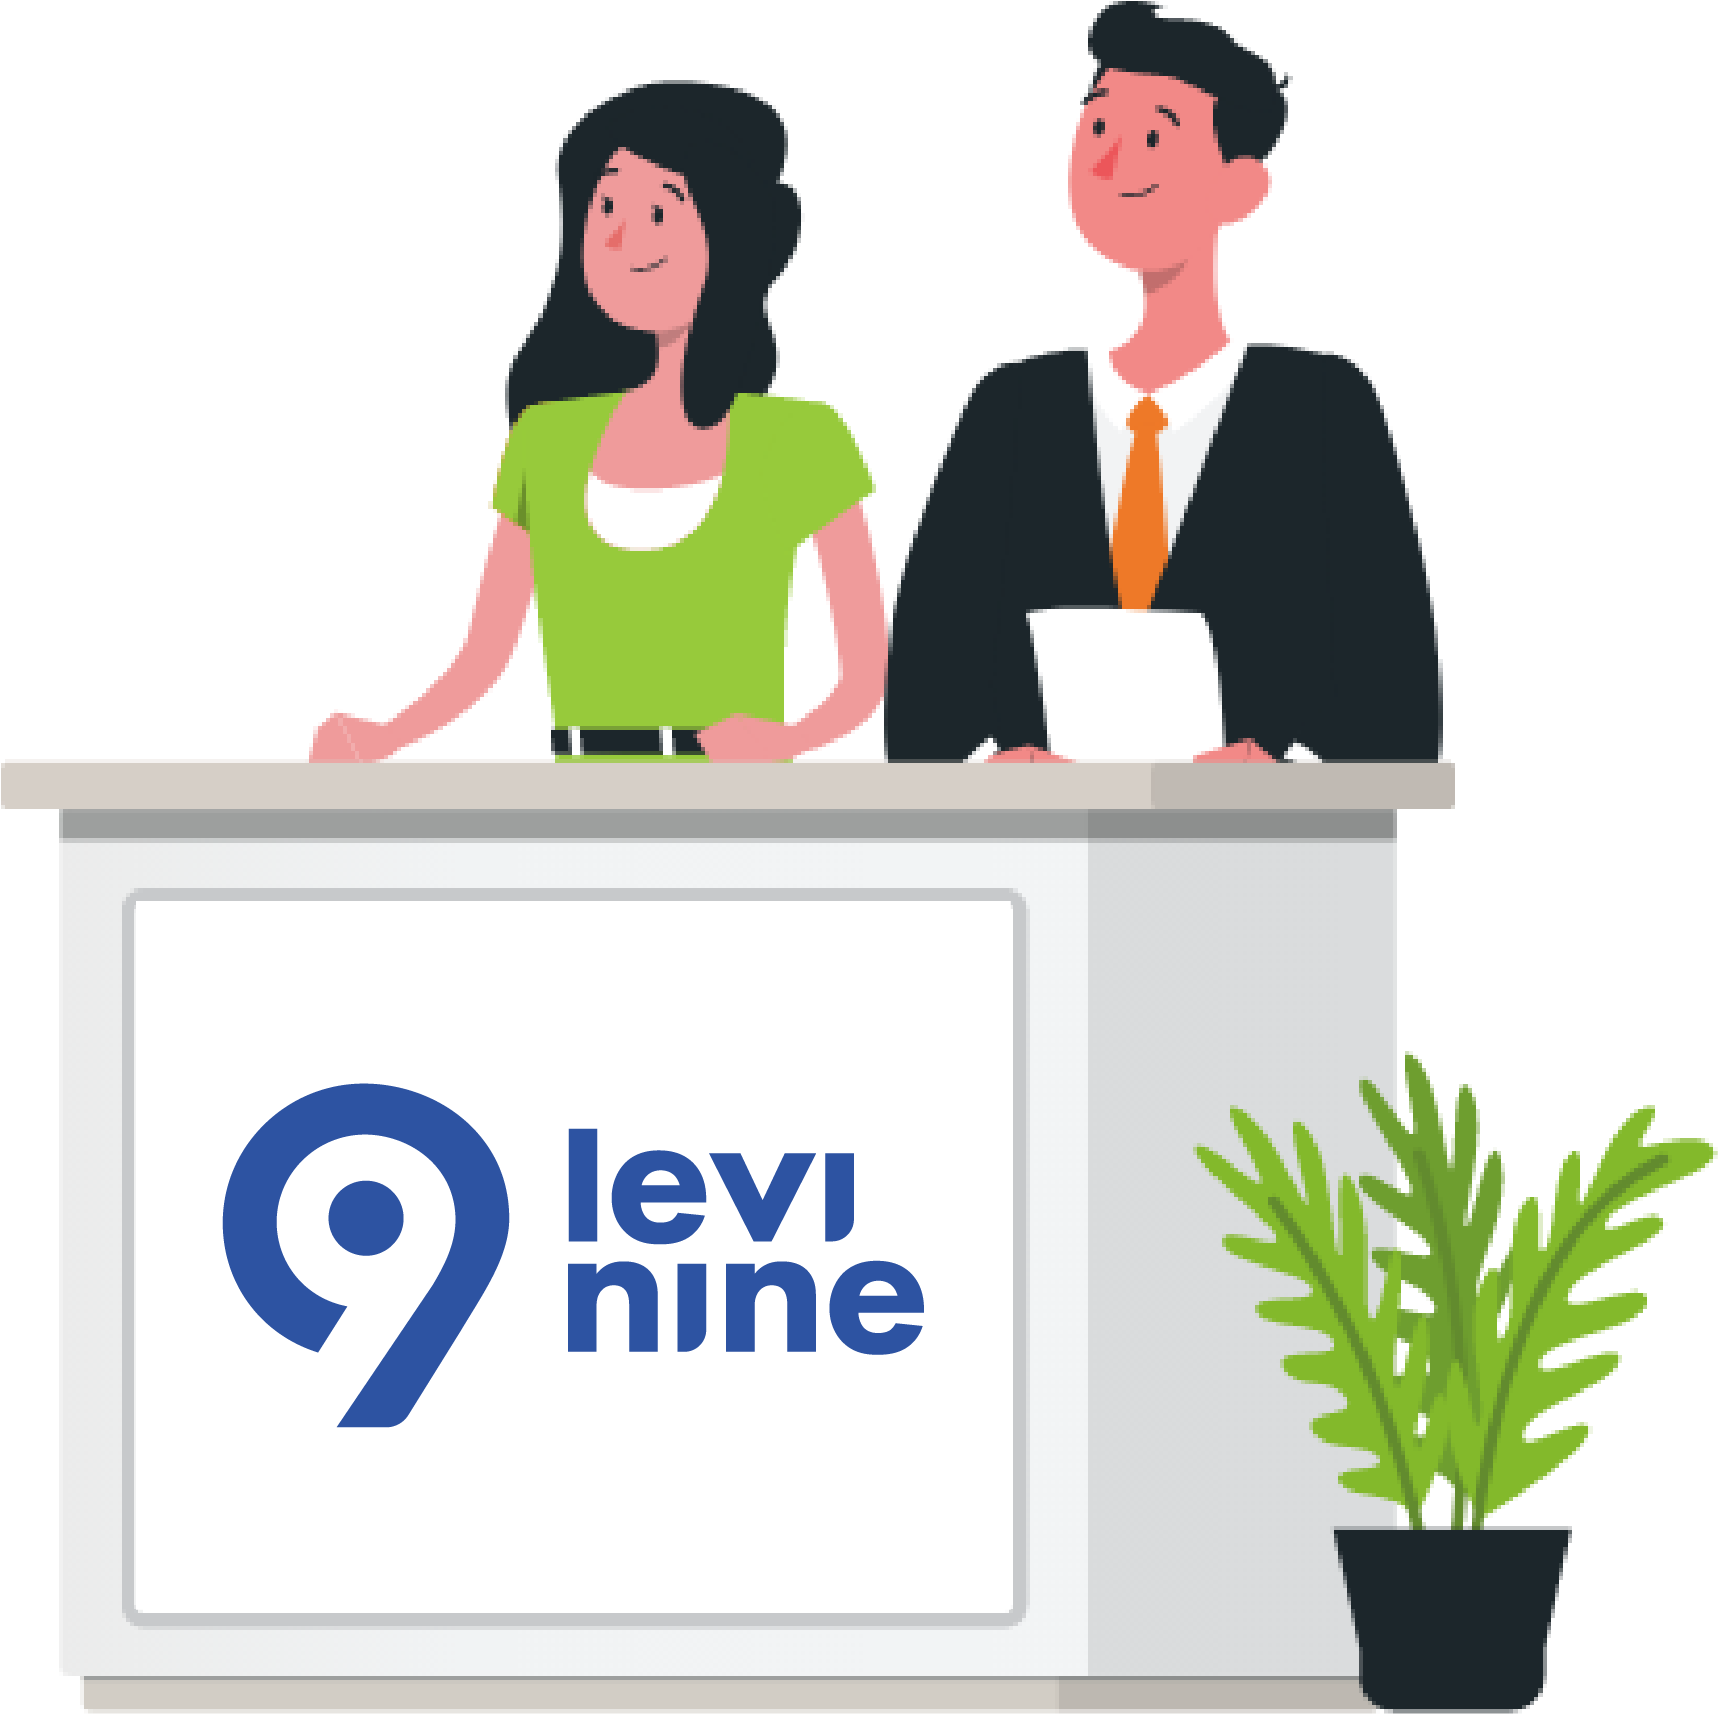 Levi9 Technology Services